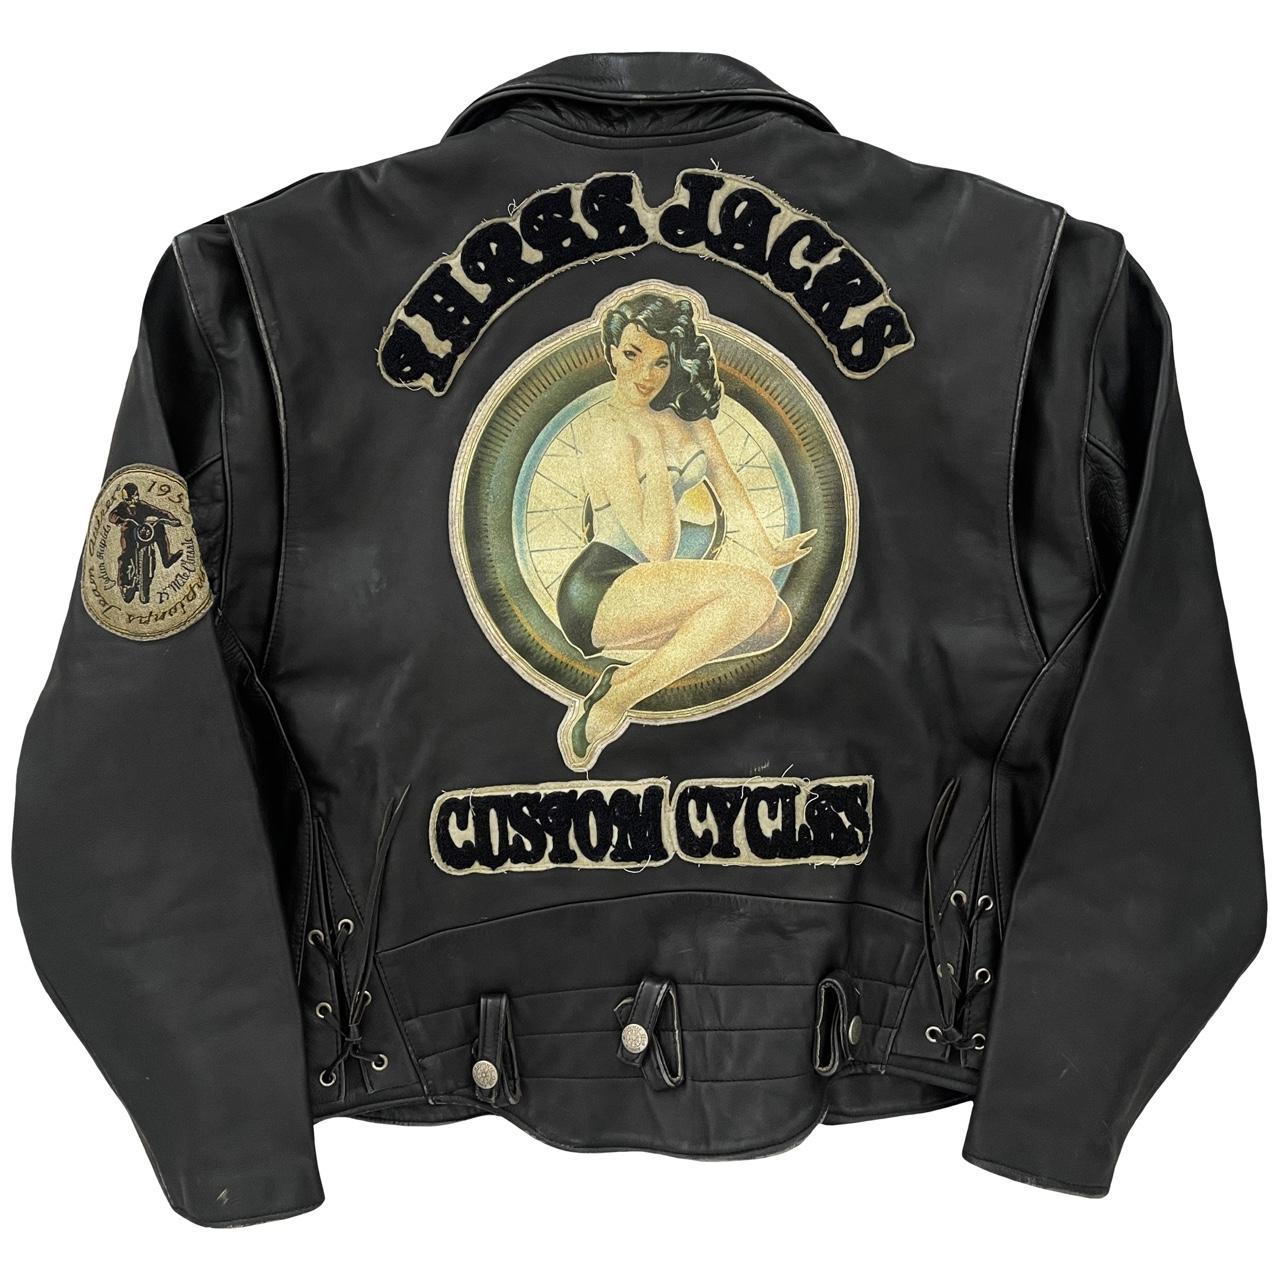 Avirex Leather Biker Jacket – The Holy Grail